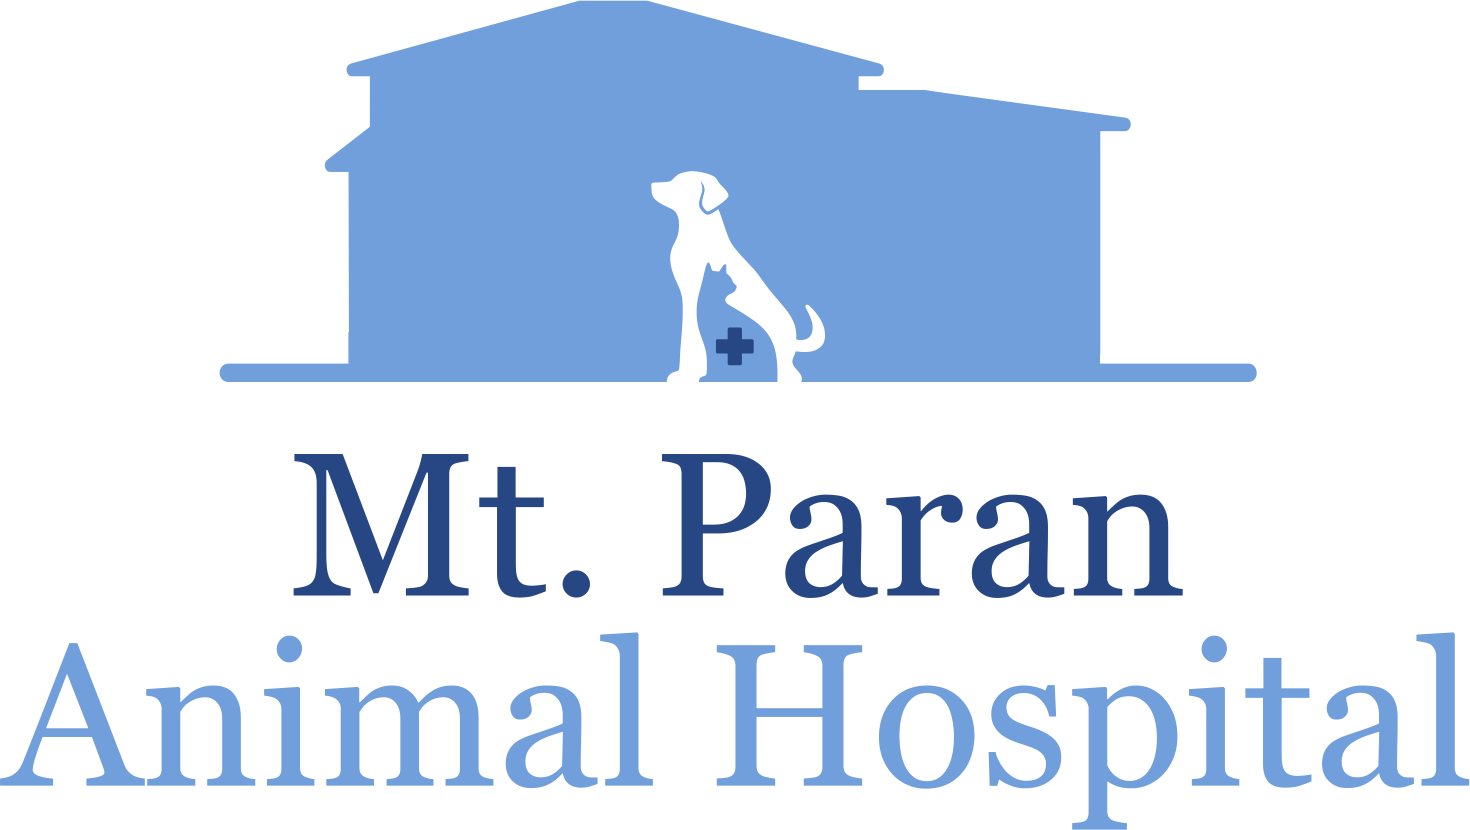 Mt Paran Animal Hospital